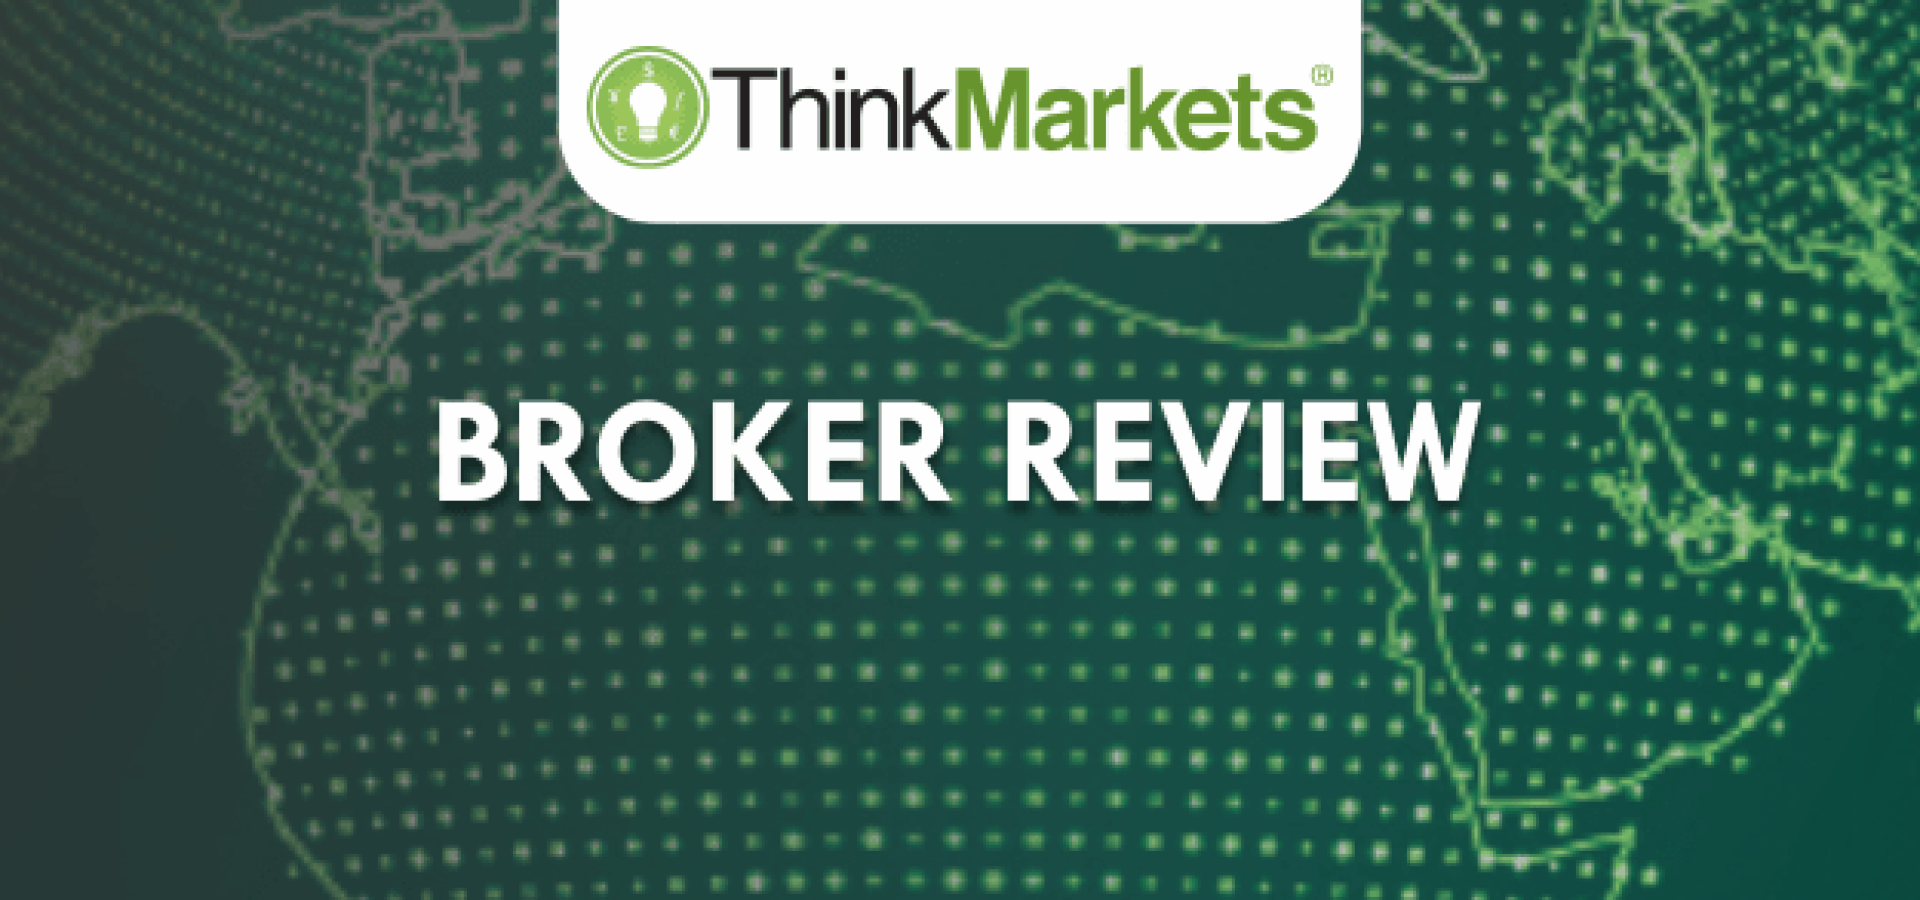 ThinkMarkets Broker Review